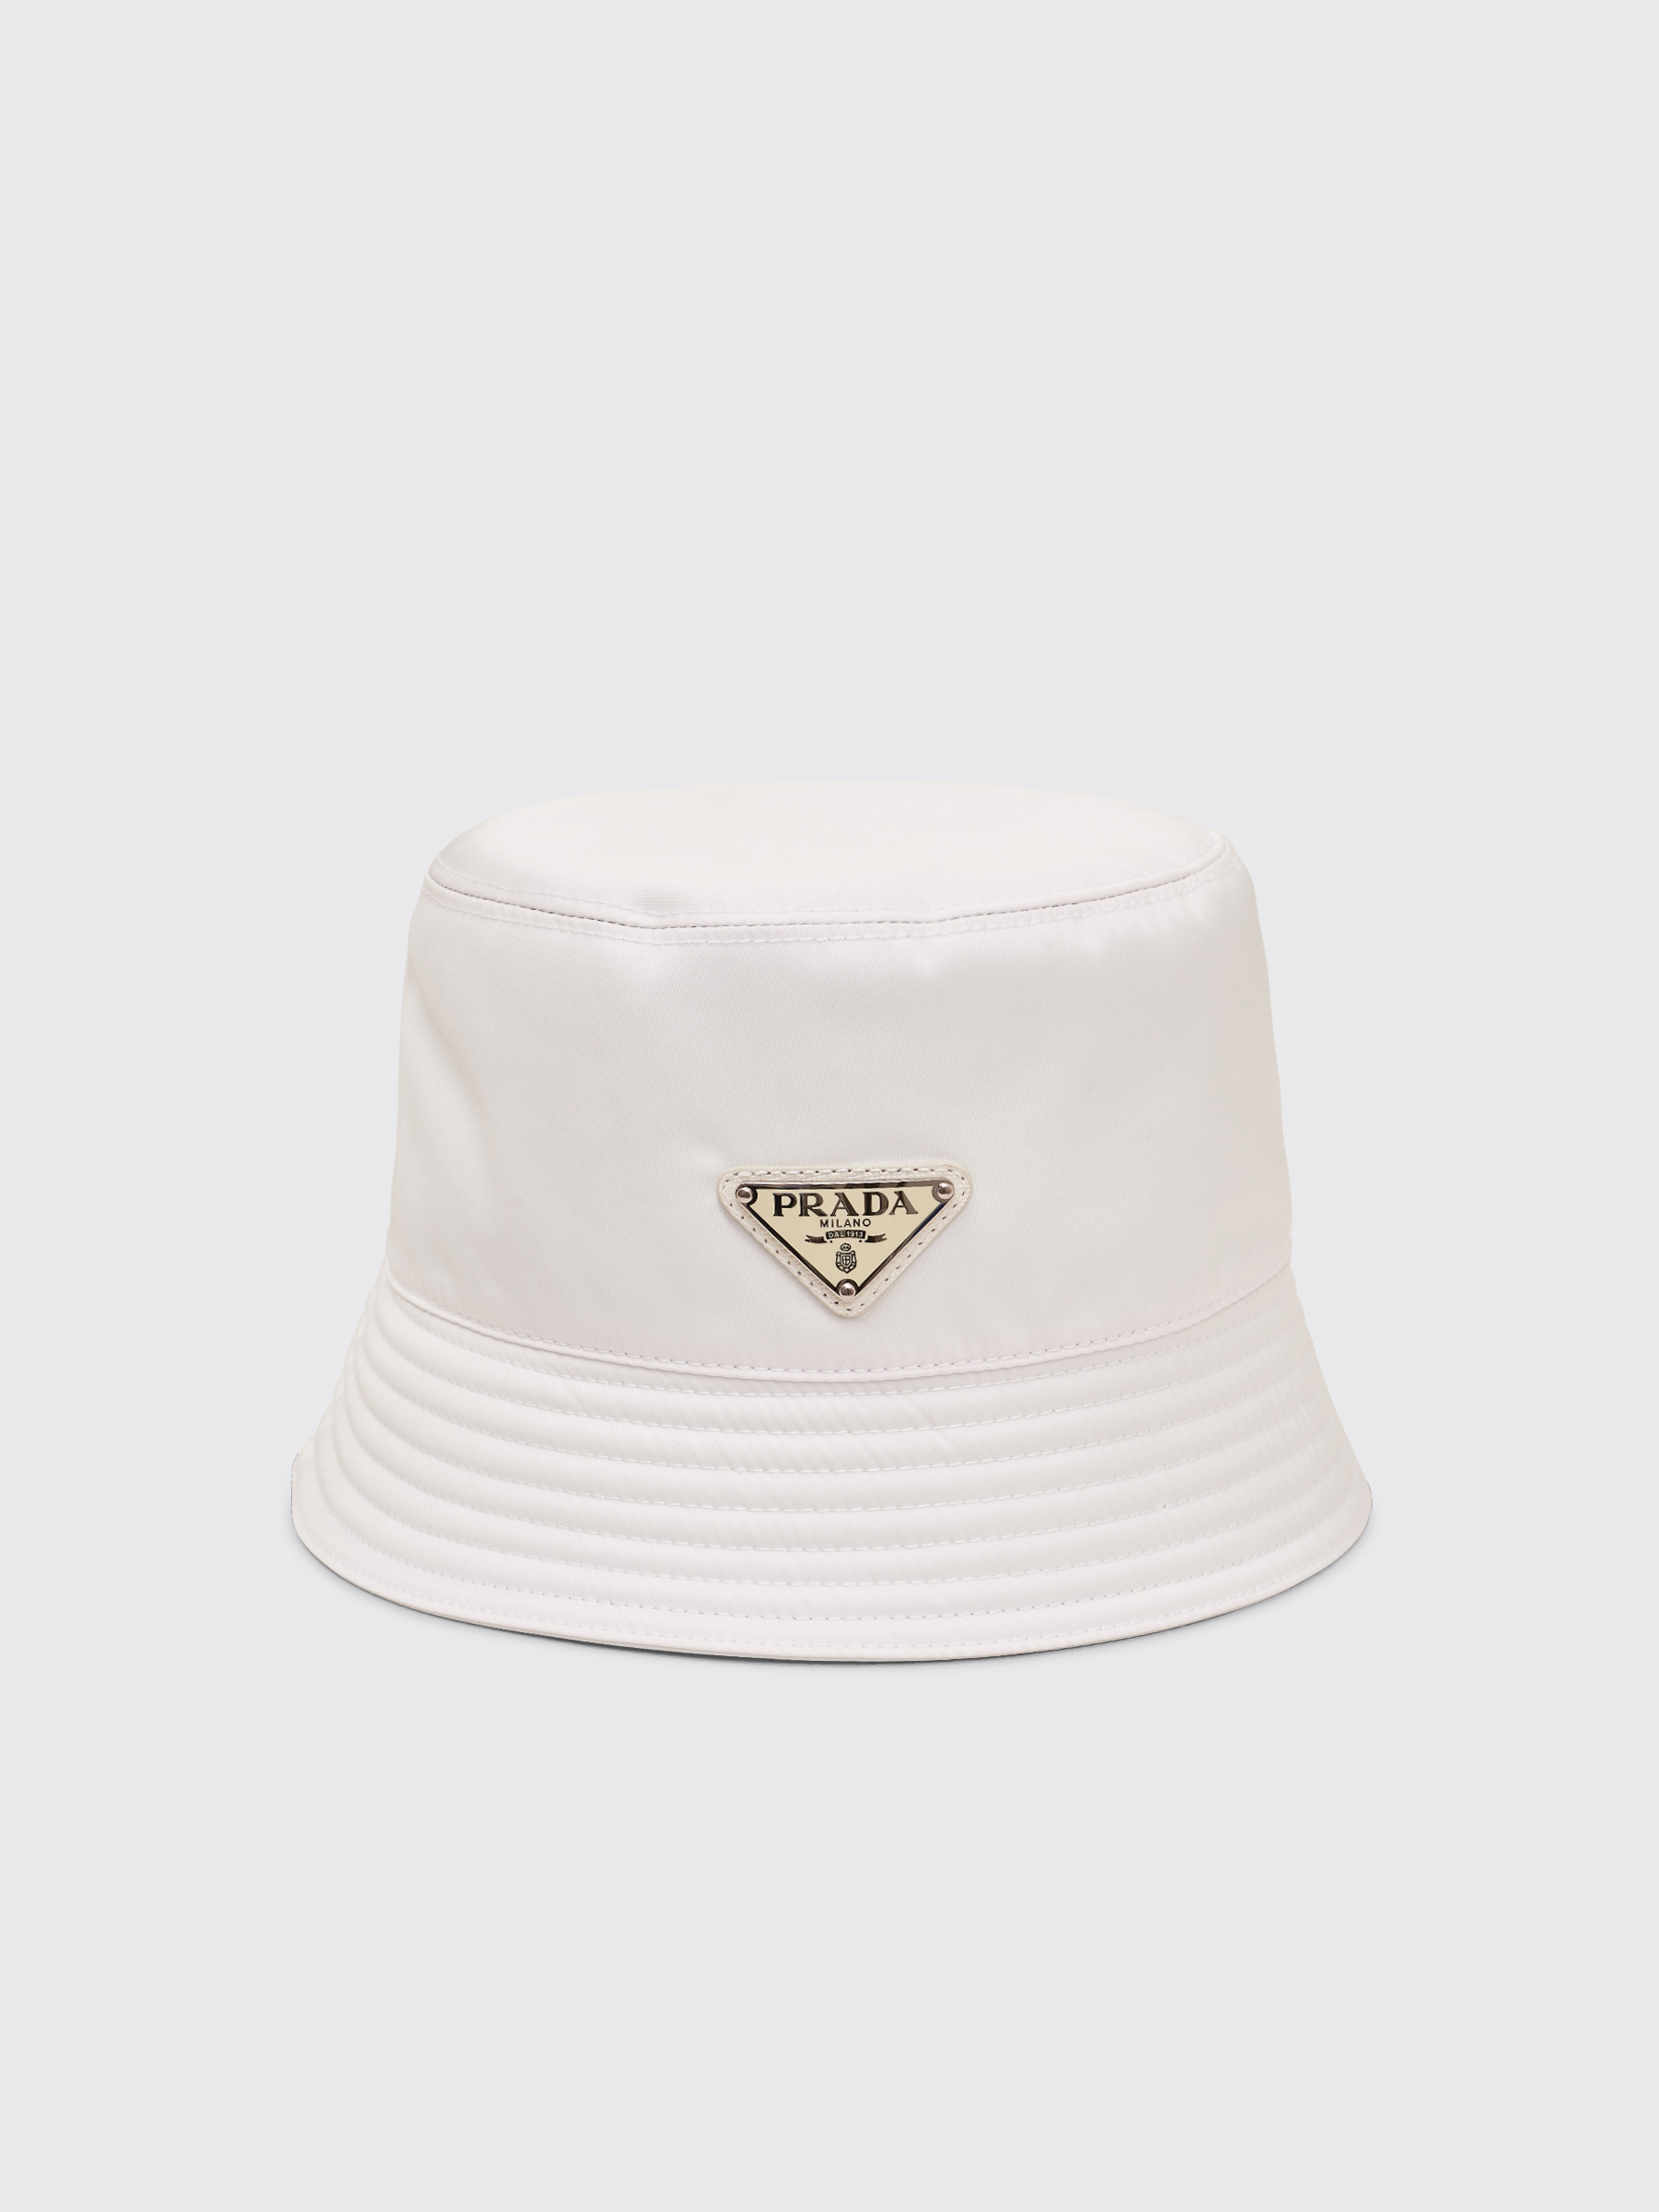 Prada Nylon Bucket Hat Triangle Logo White